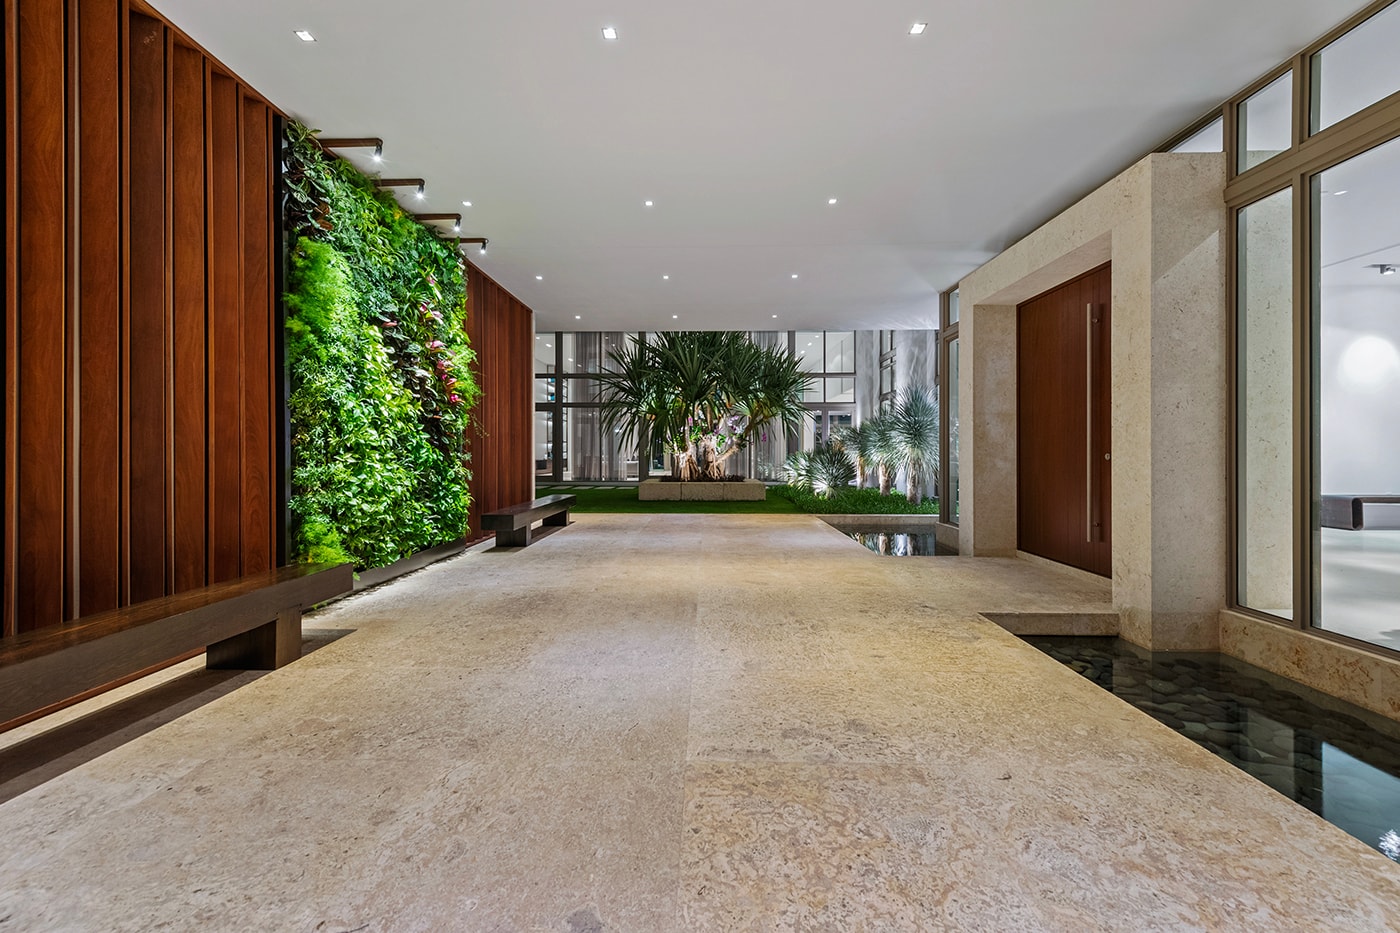 Sotheby’s International Realty Miami Heat Chris Bosh North Bay 42 million usd florida home mansions homes design Touzet Studio AquaBlue Group